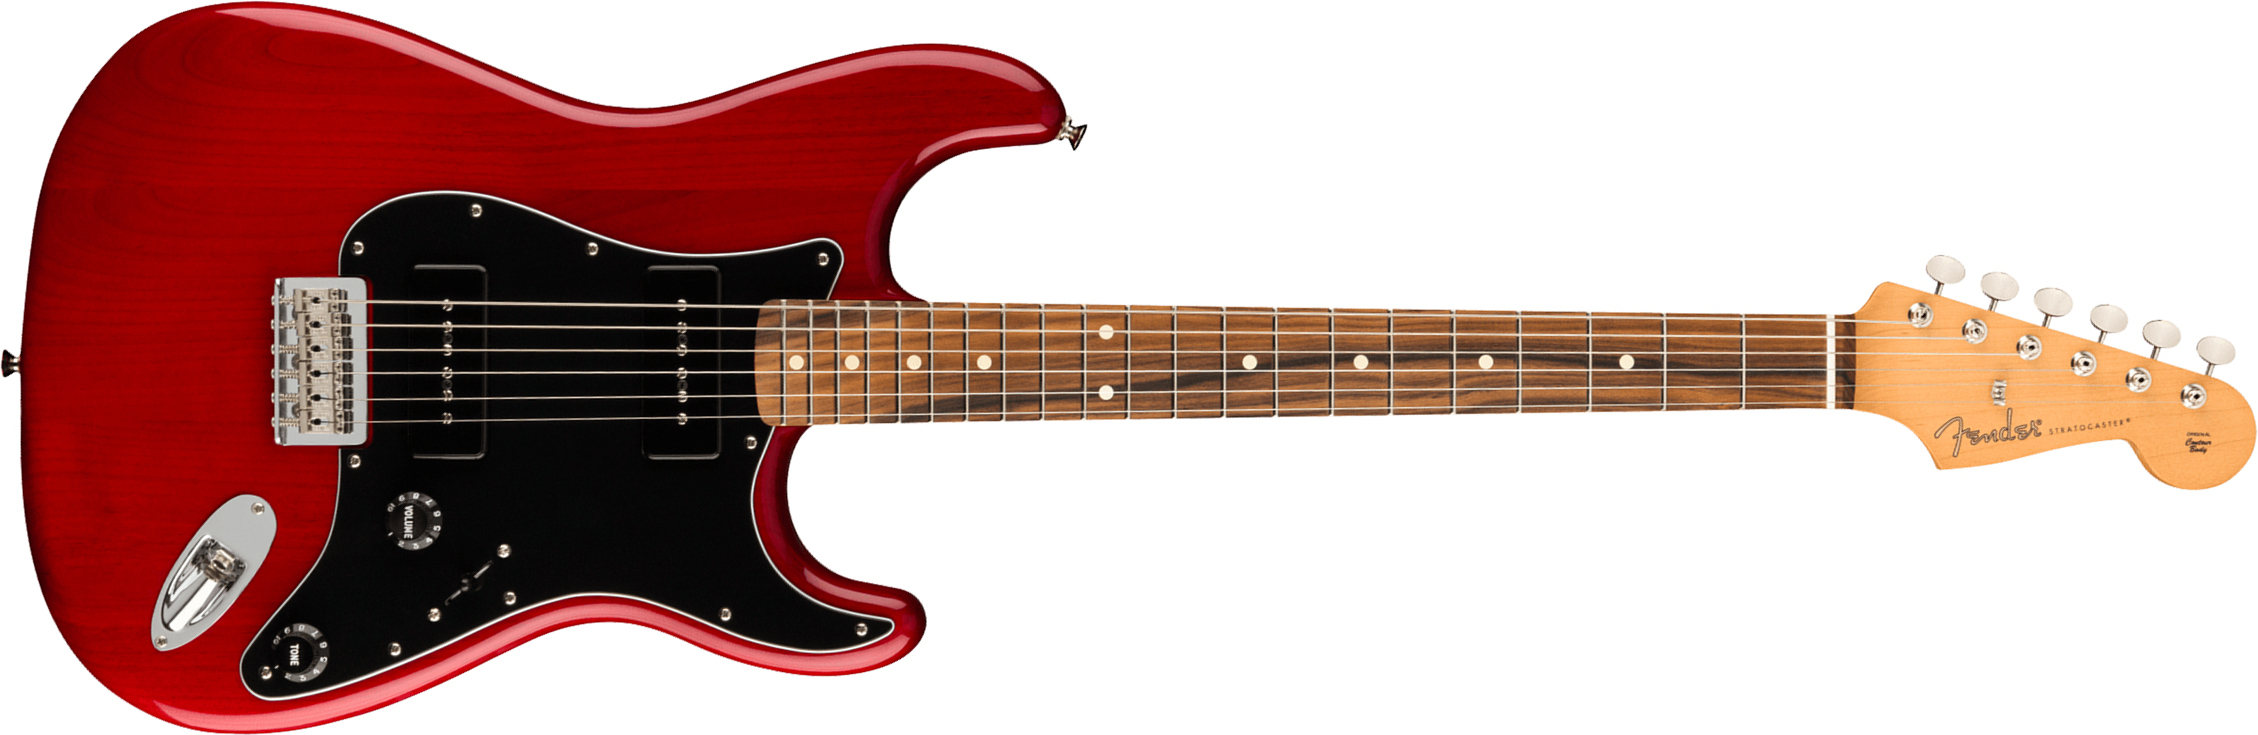 Fender Strat Noventa Mex Ss Ht Pf +housse - Crimson Red Transparent - E-Gitarre in Str-Form - Main picture